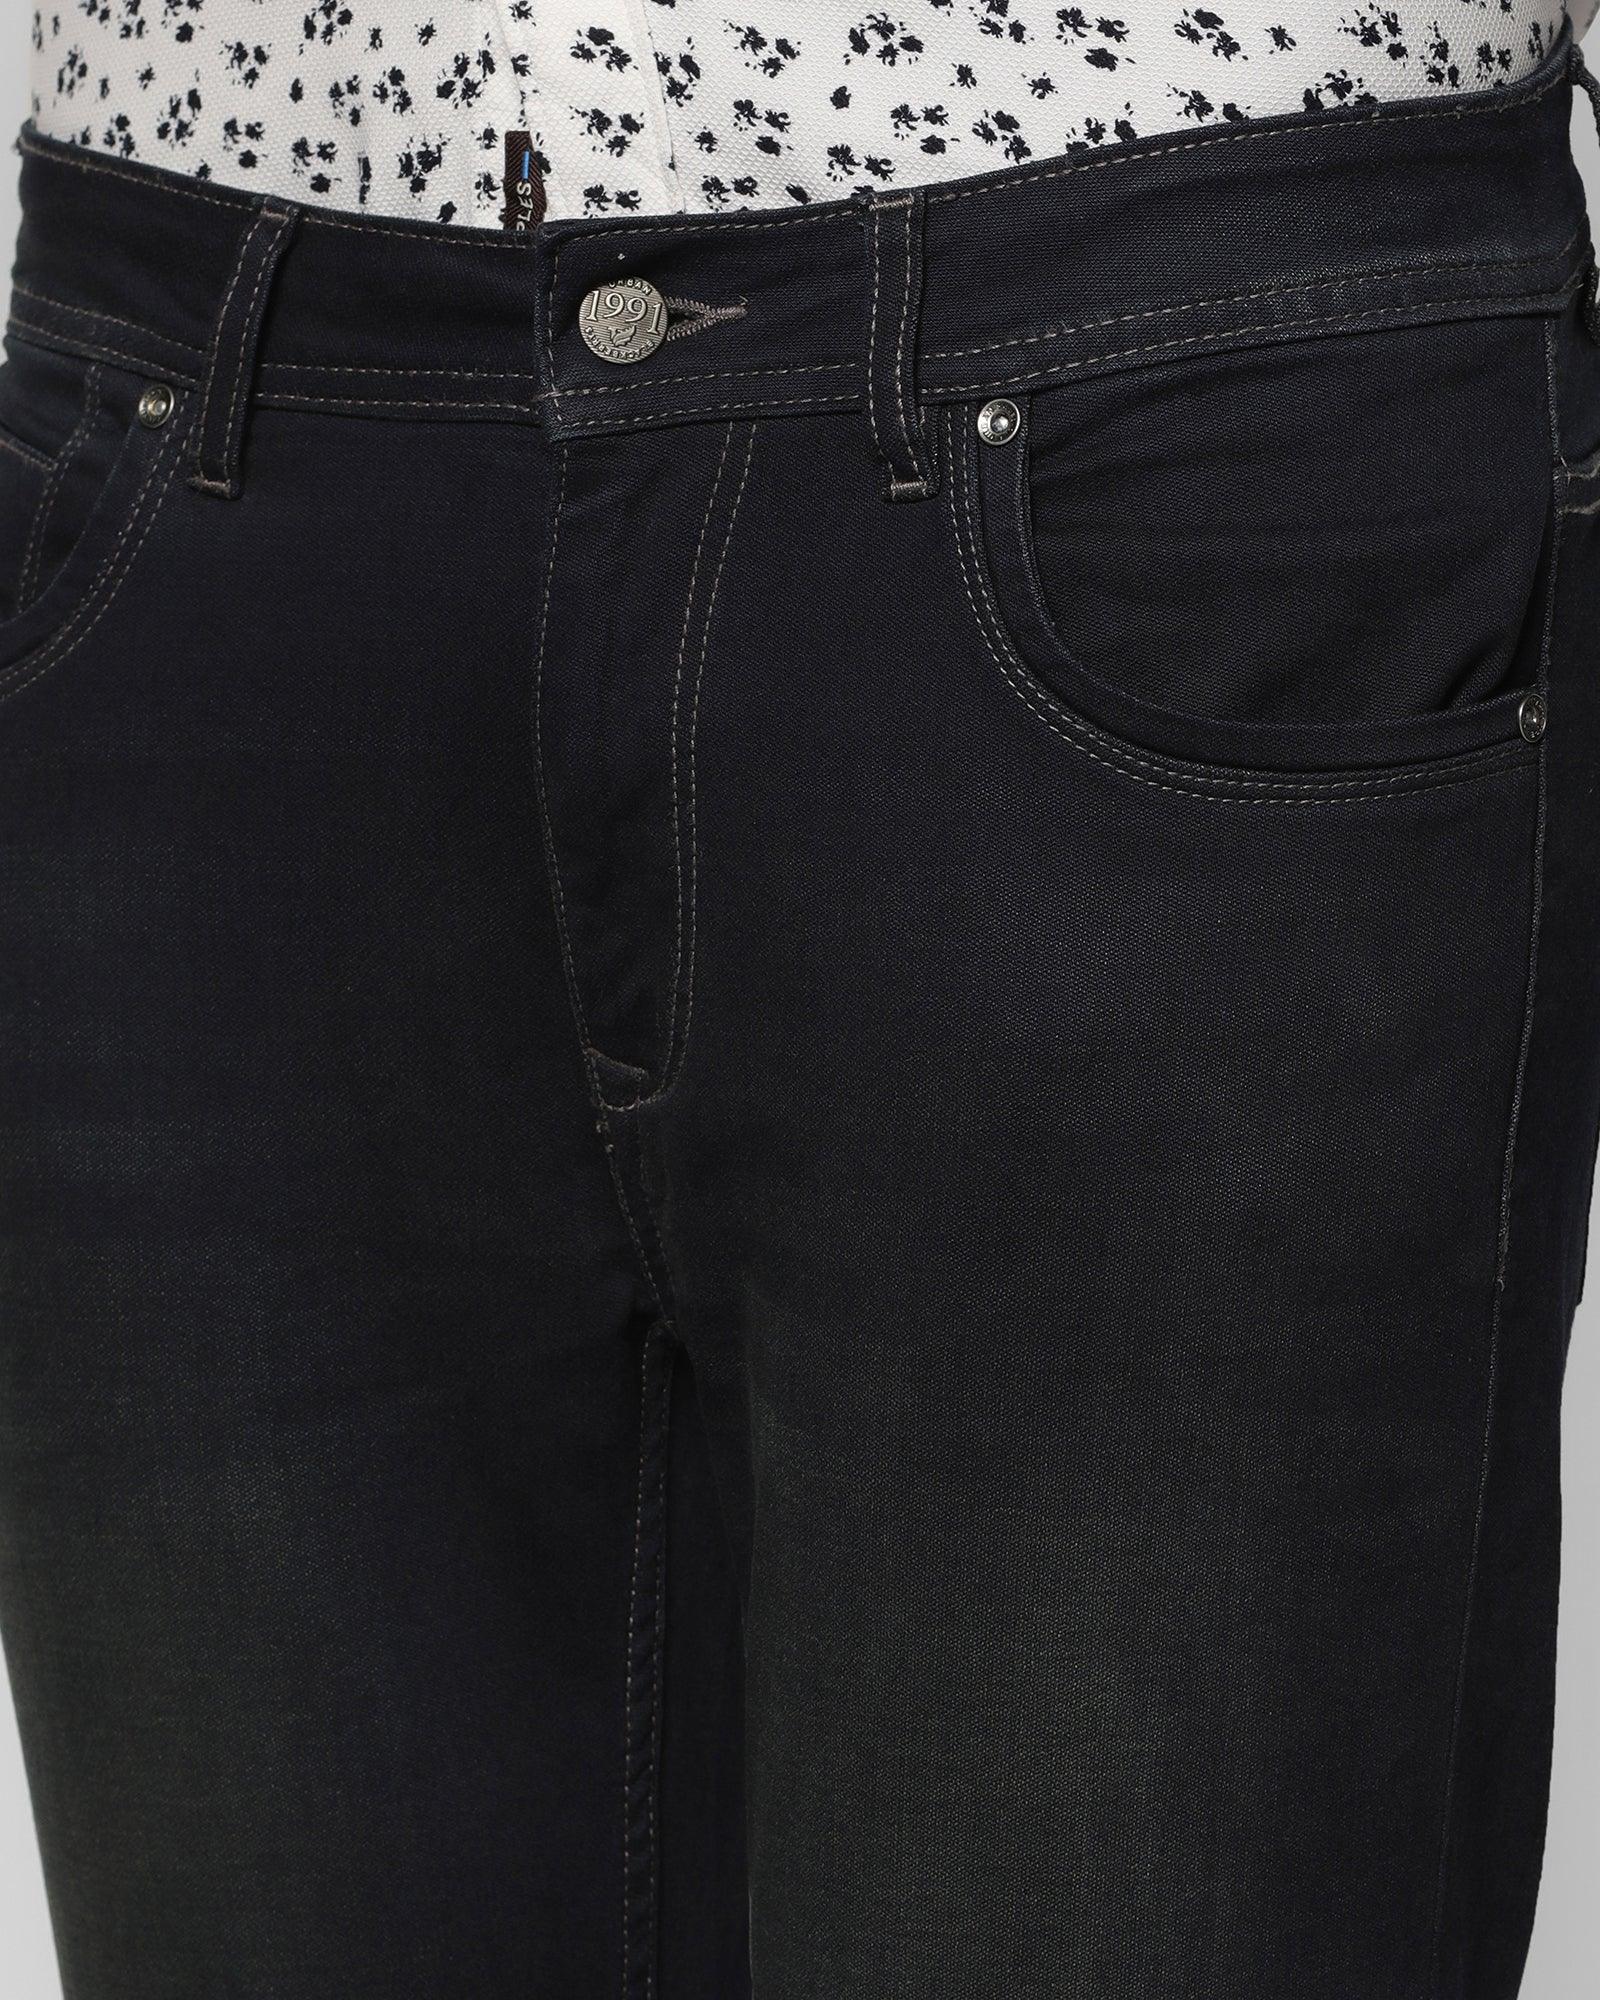 Super Clean Skinny Cropped Fiji Fit Indigo Jeans - Easton